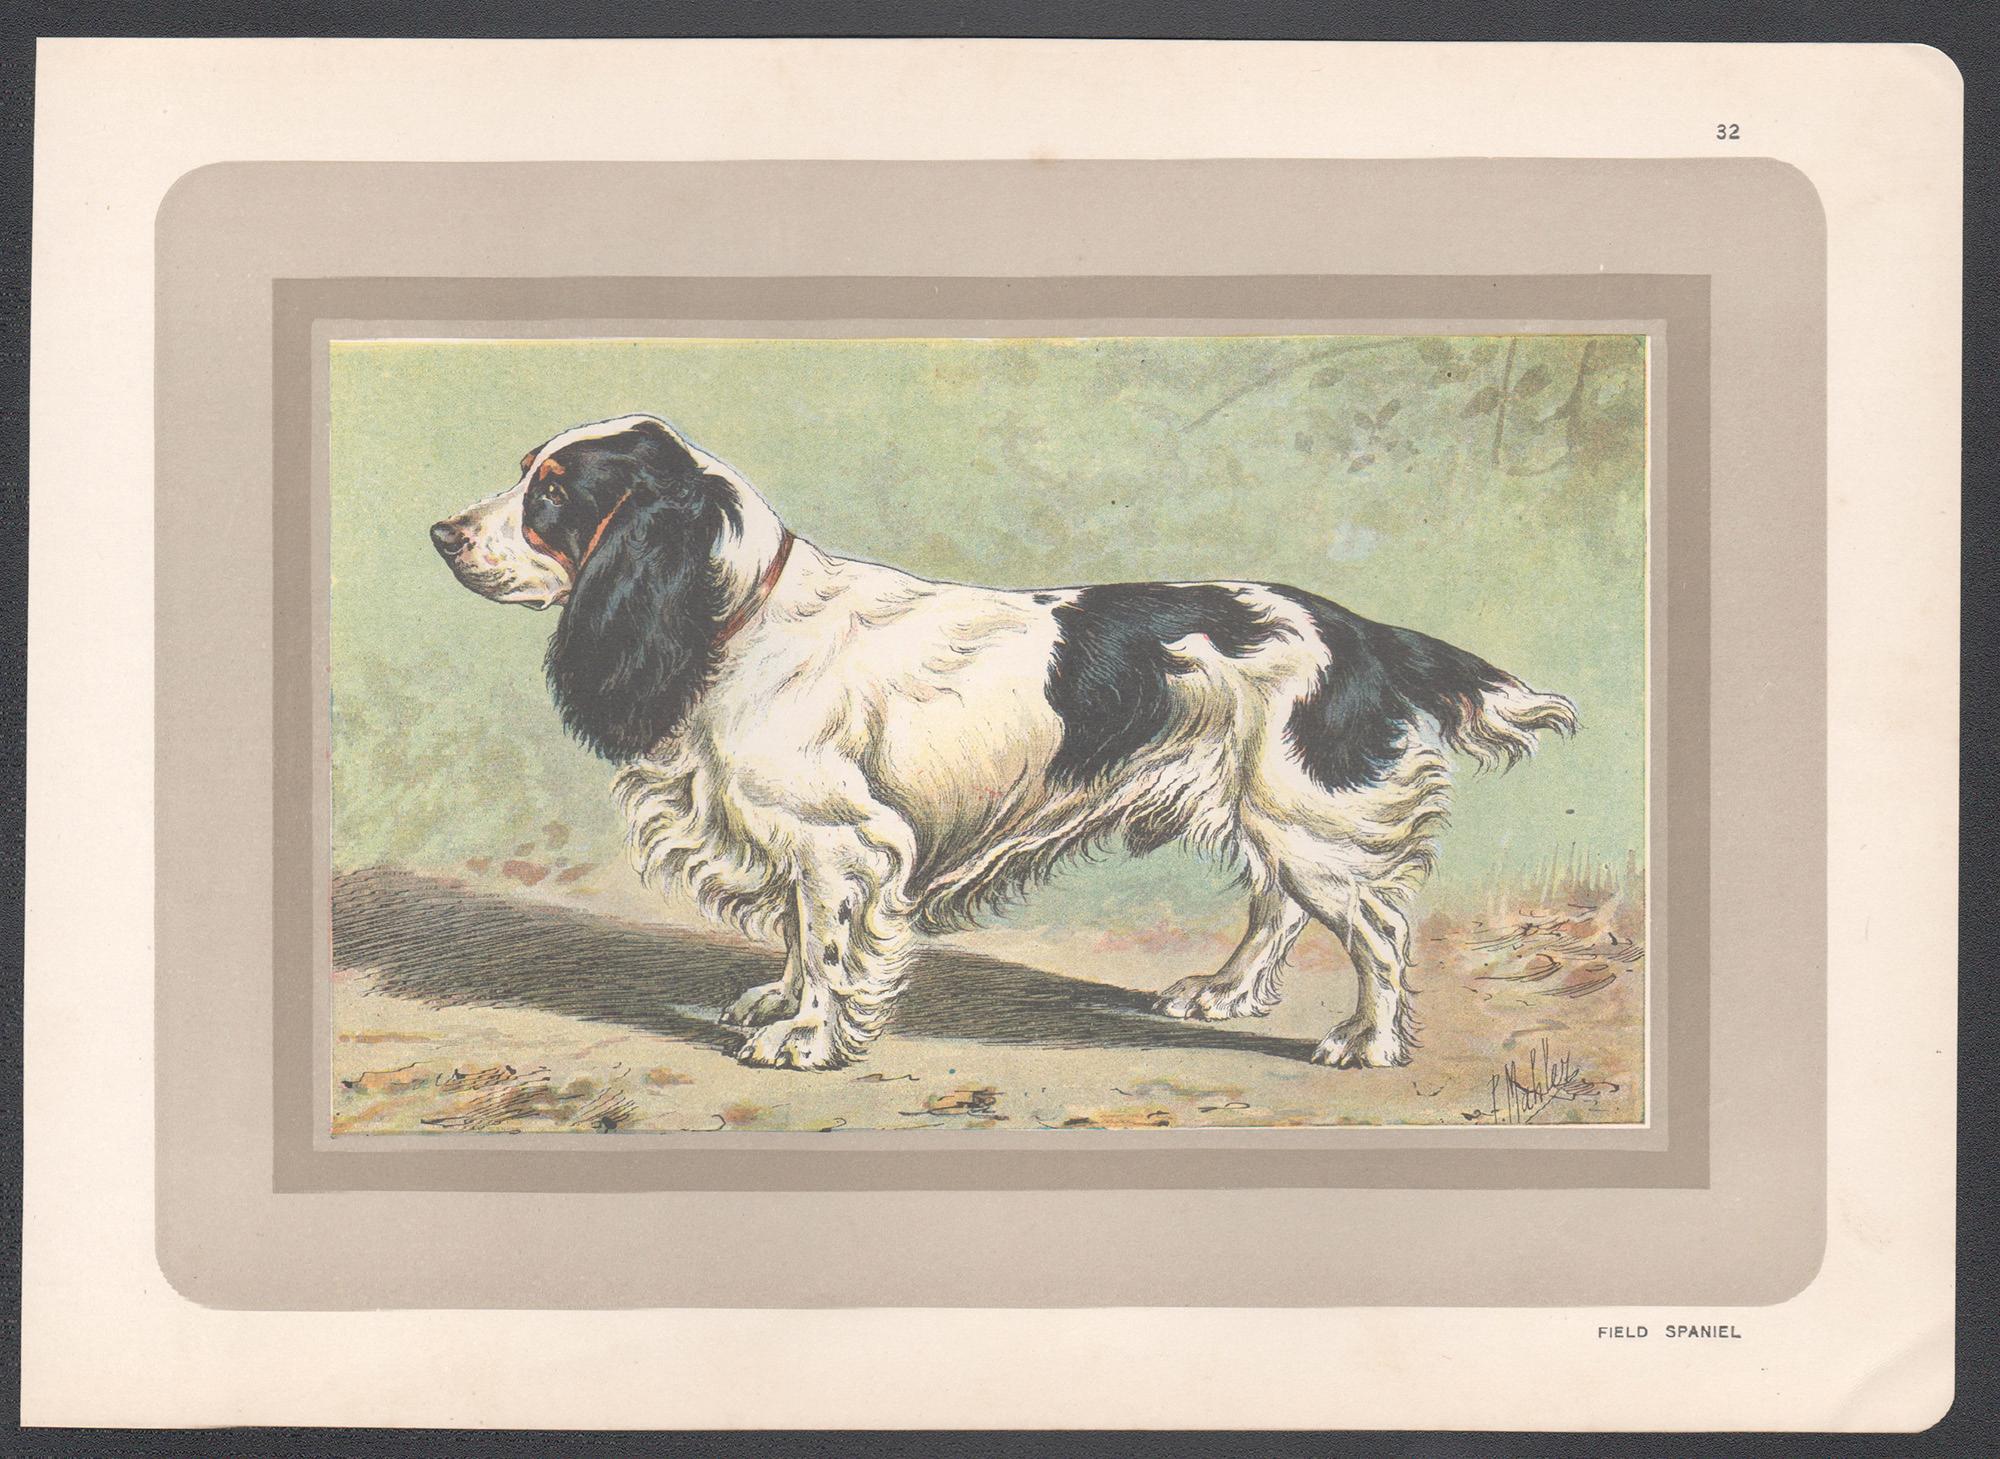 Field Spaniel, French hound dog chromolithograph print, 1930s - Print by P. Mahler